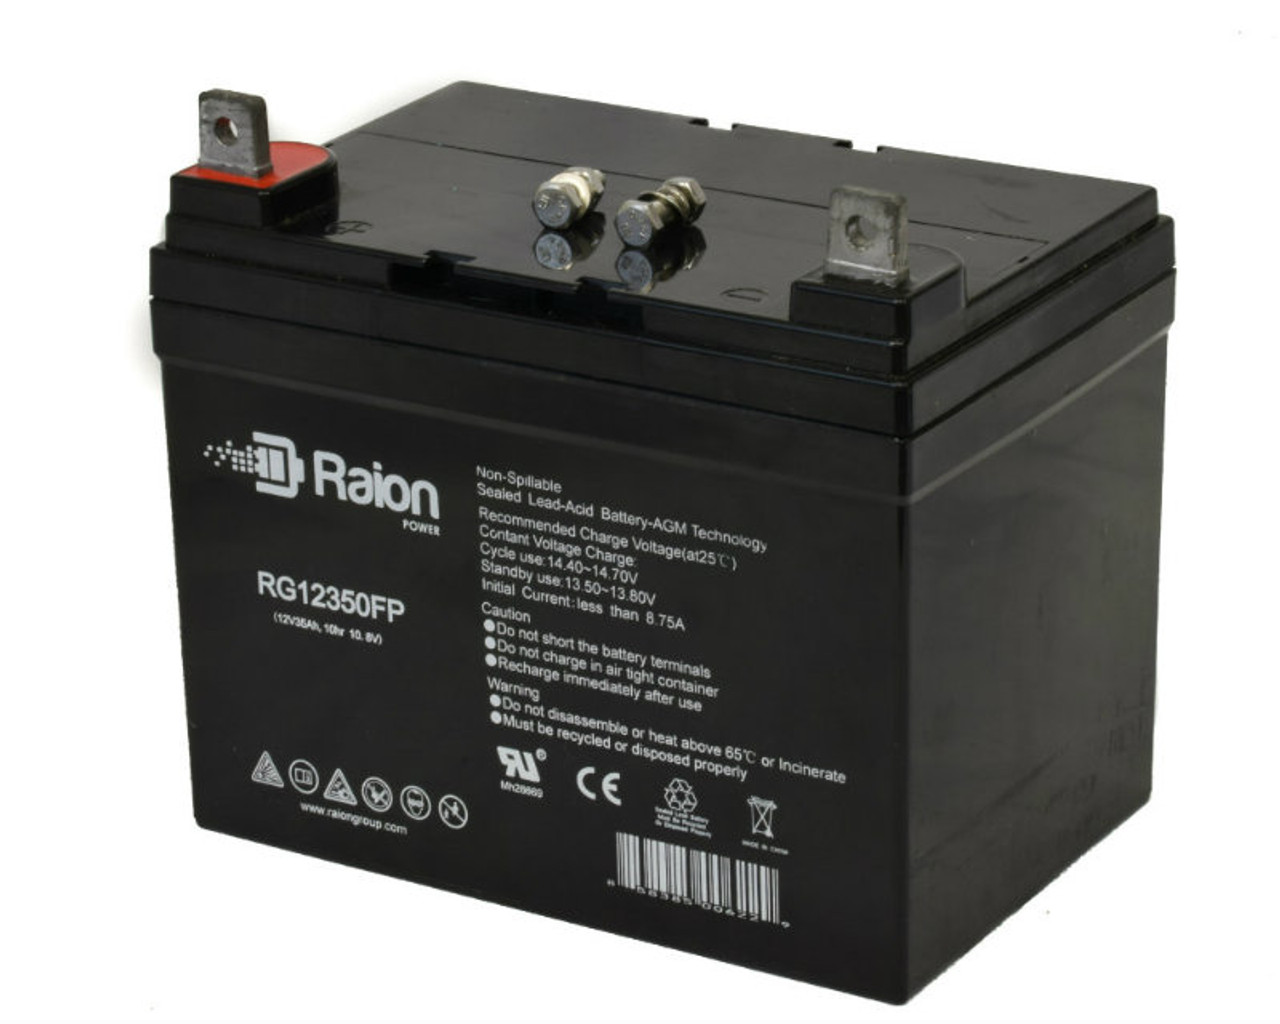 Raion Power 12V 35Ah Replacement UPS Battery Cartridge for Best Power FERRUPS ME 3.1KVA